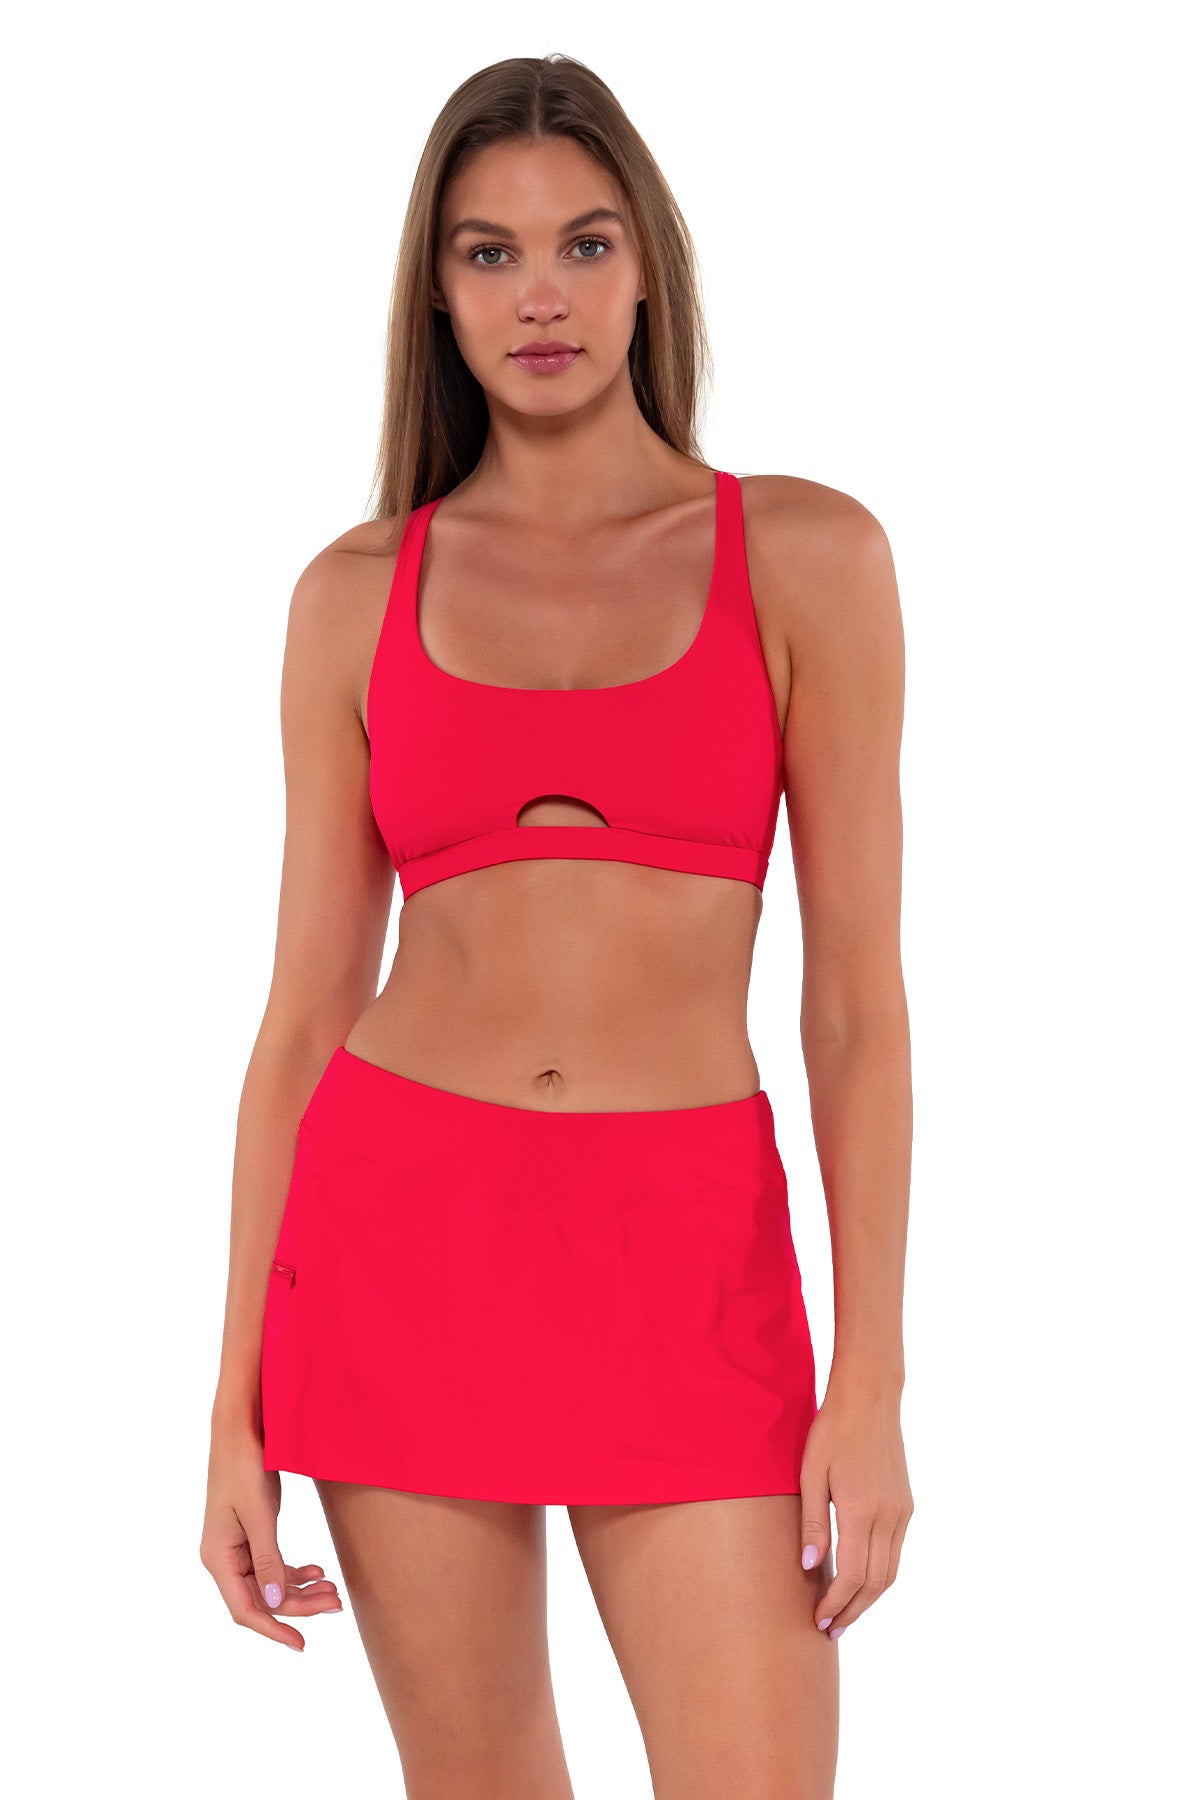 Front Front pose #1 of Daria wearing Sunsets Geranium Sporty Swim Skirt with matching Brandi Bralette bikini top